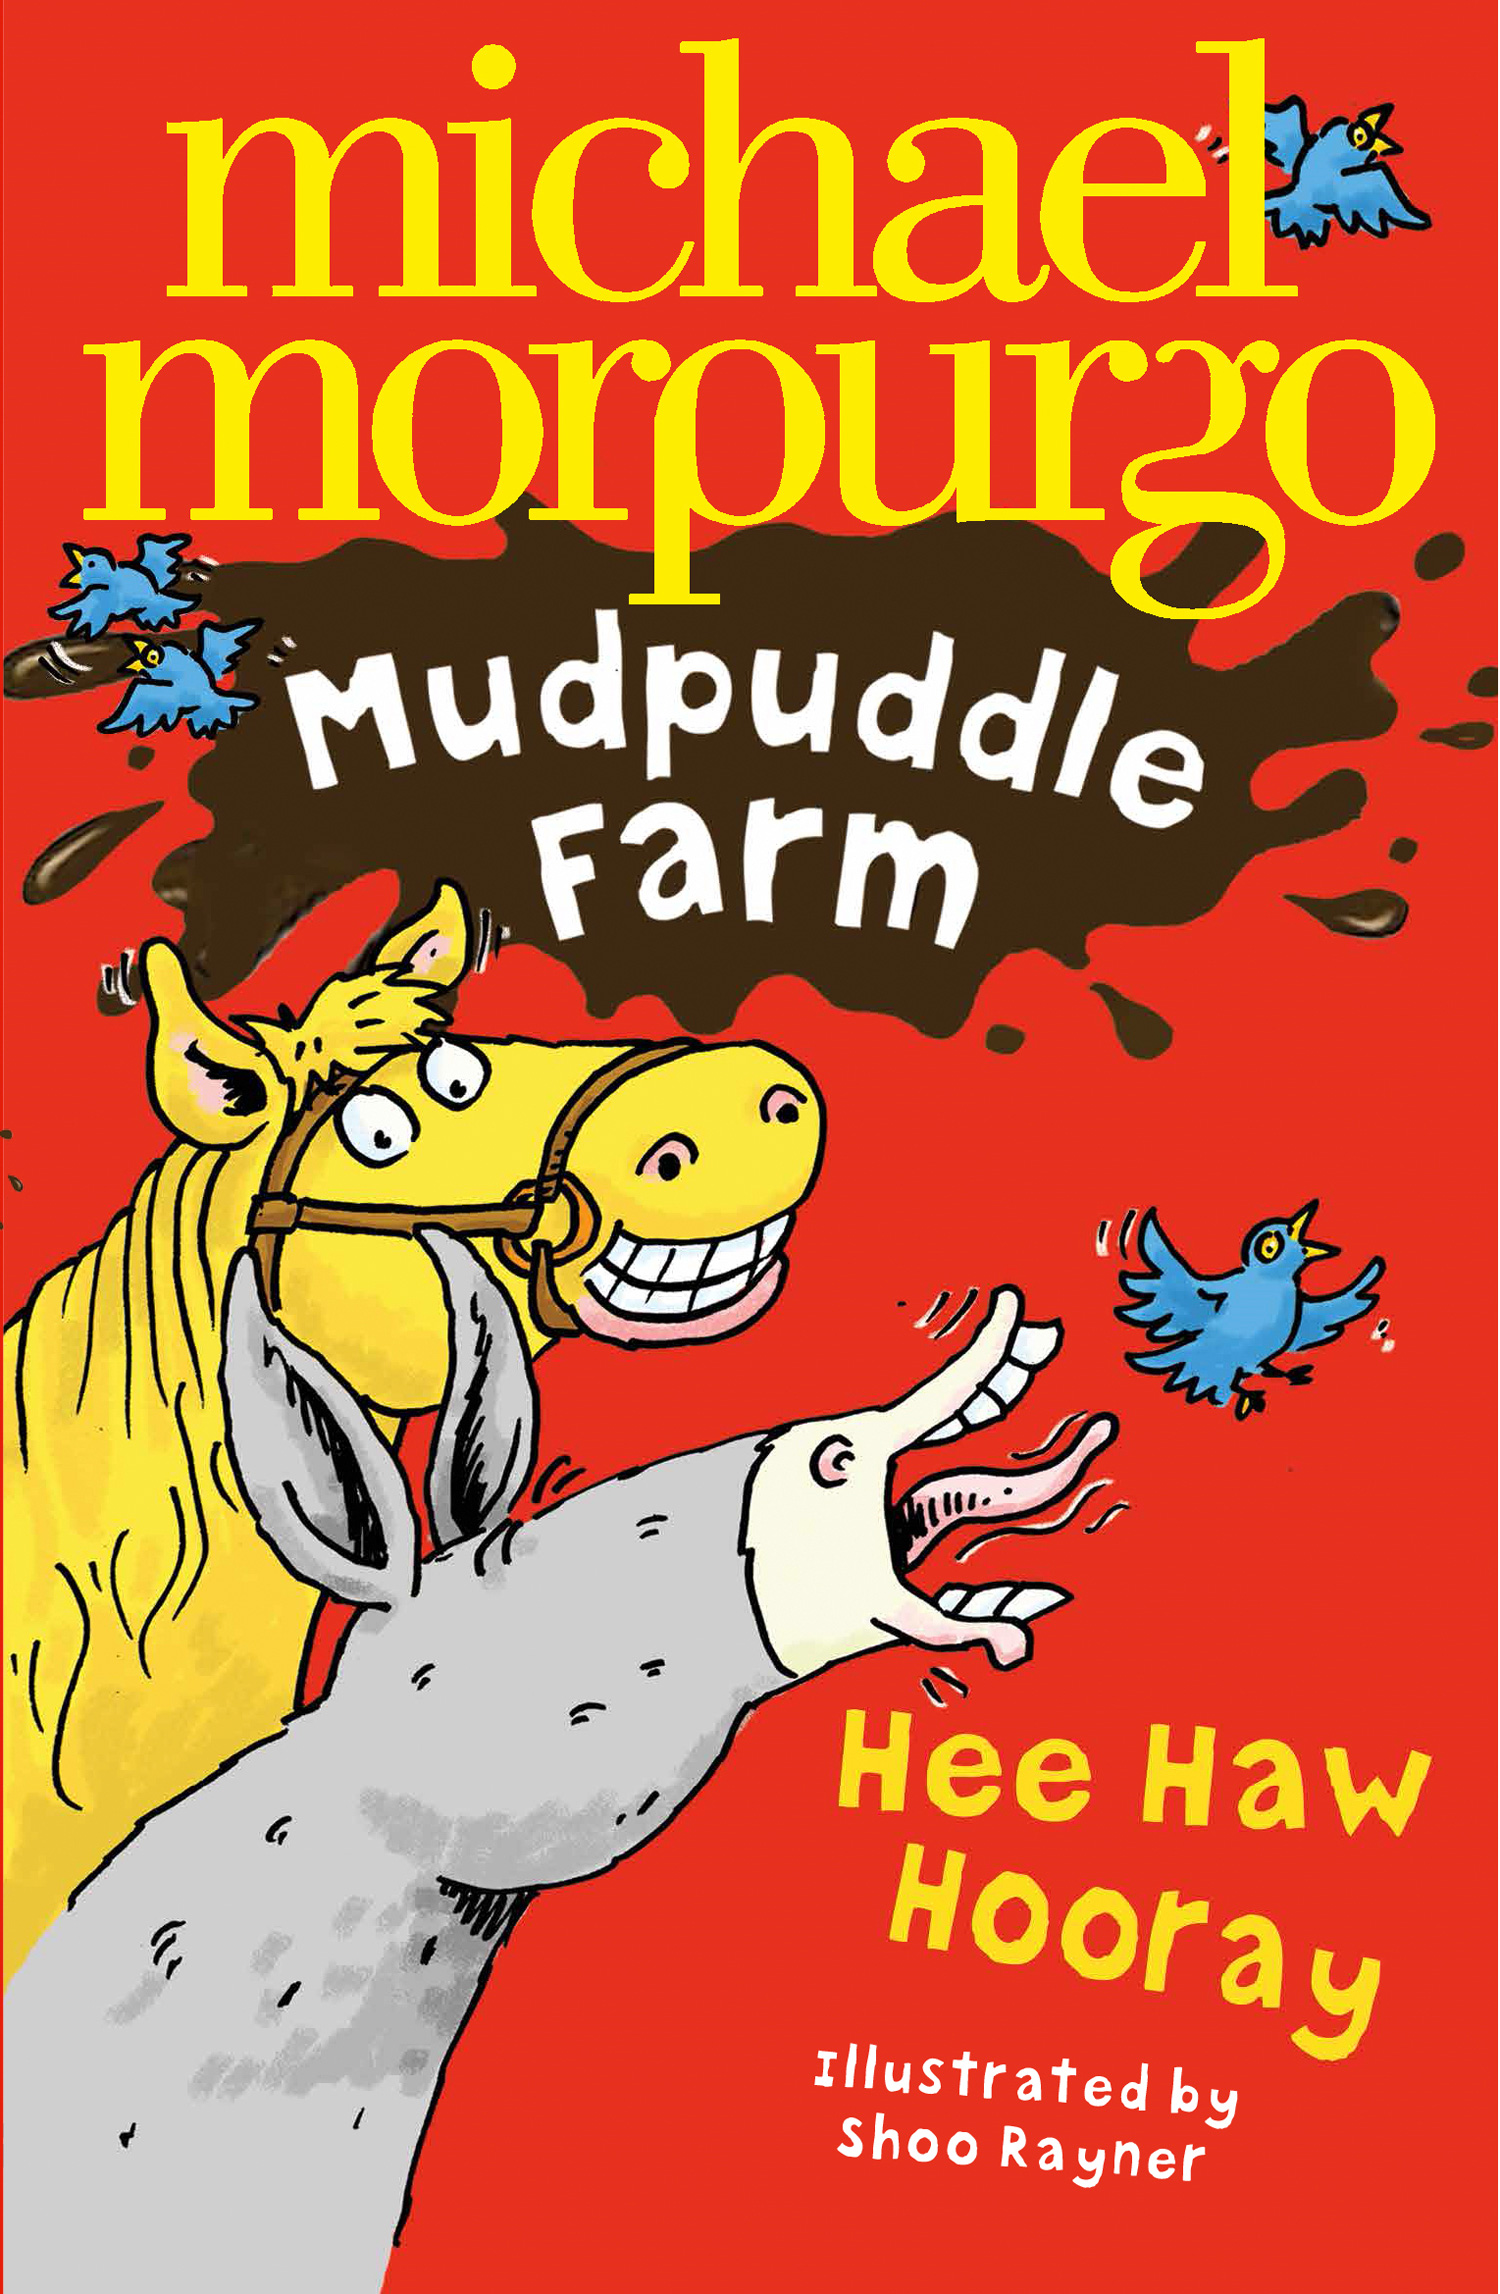 Brand new Mudpuddle Farm stories published - Michael Morpurgo